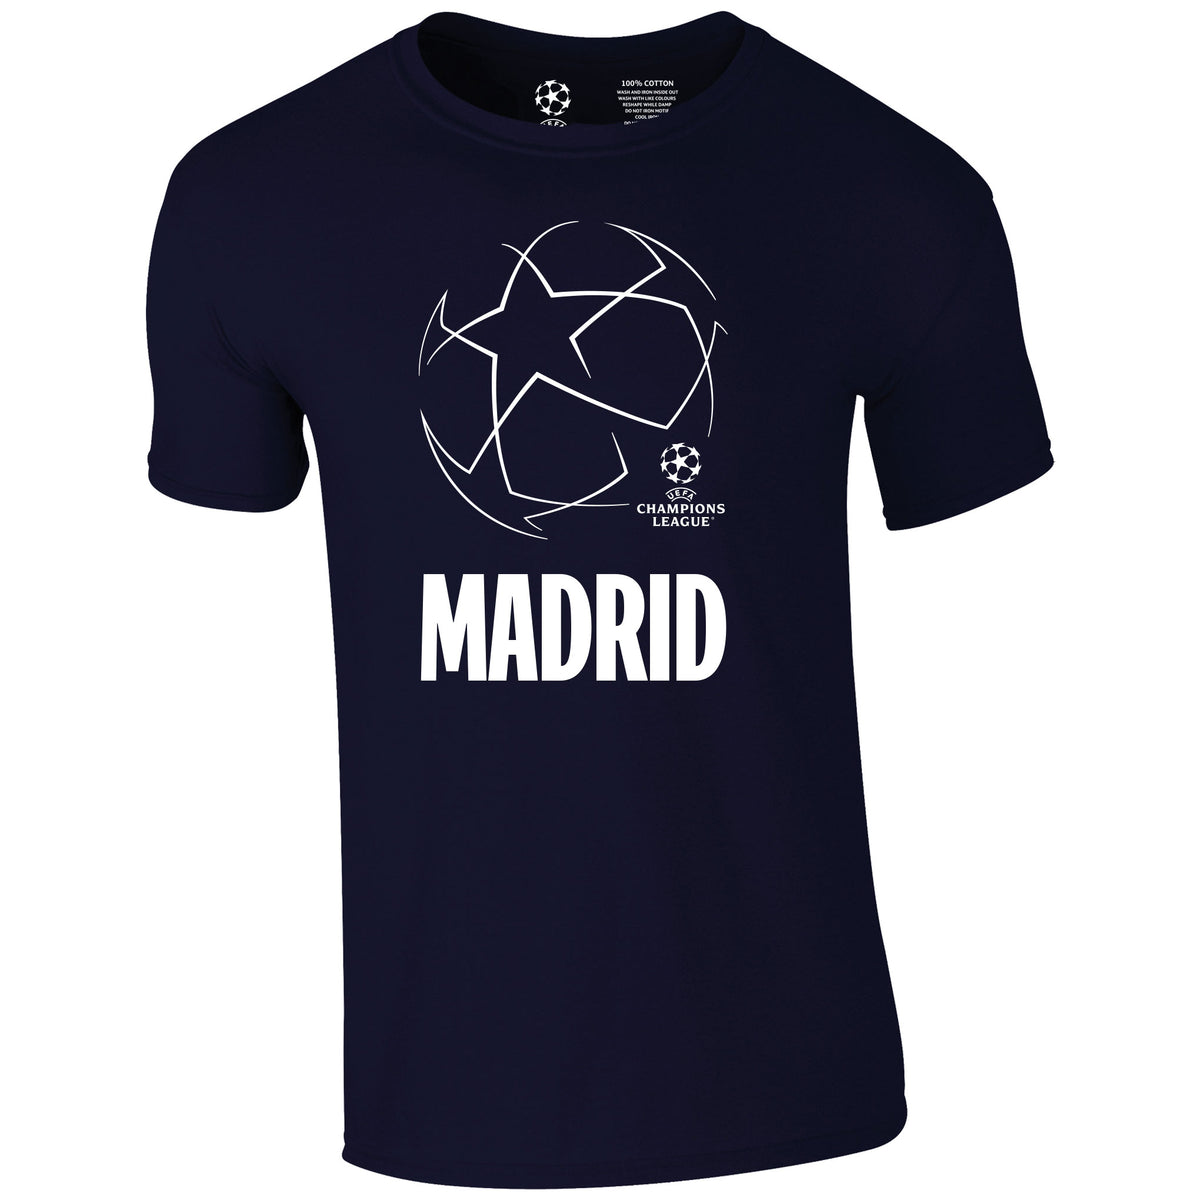 Champions League Starball Madrid City T-Shirt Navy